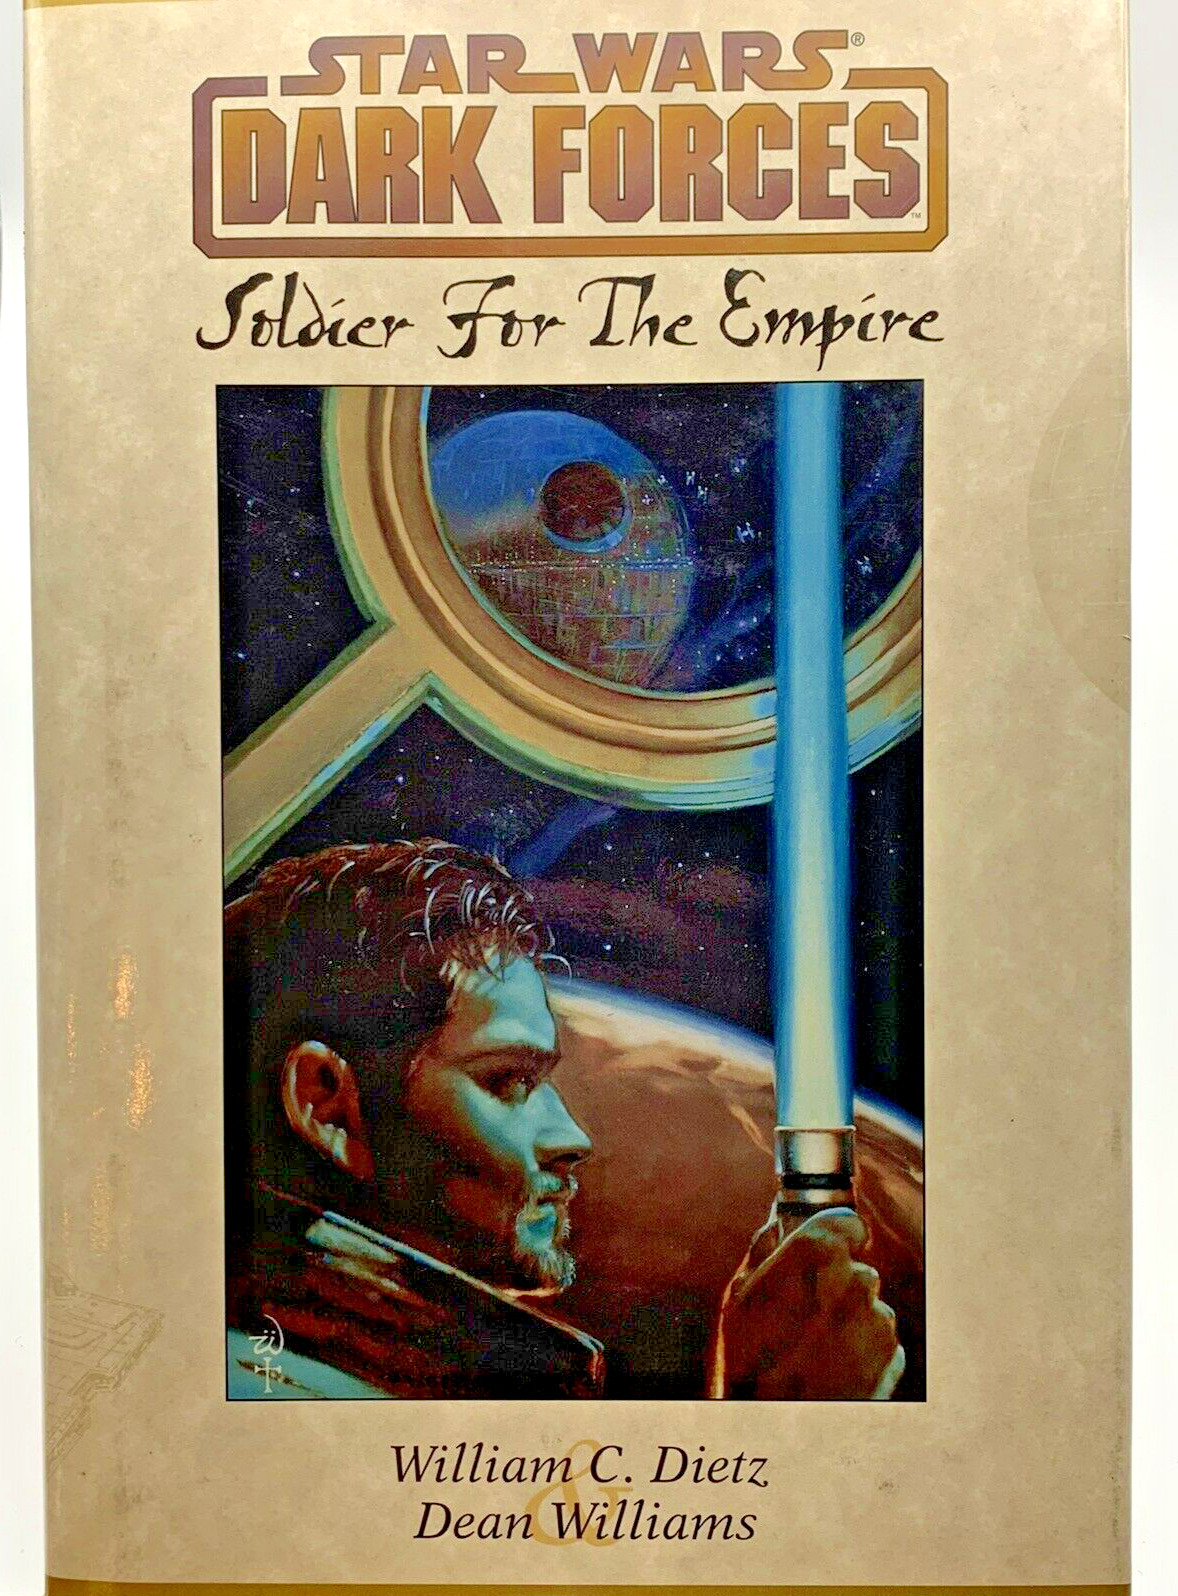 Star Wars Dark Forces Book 1 Soldier for the Empire 1997 Hardcover William Dietz